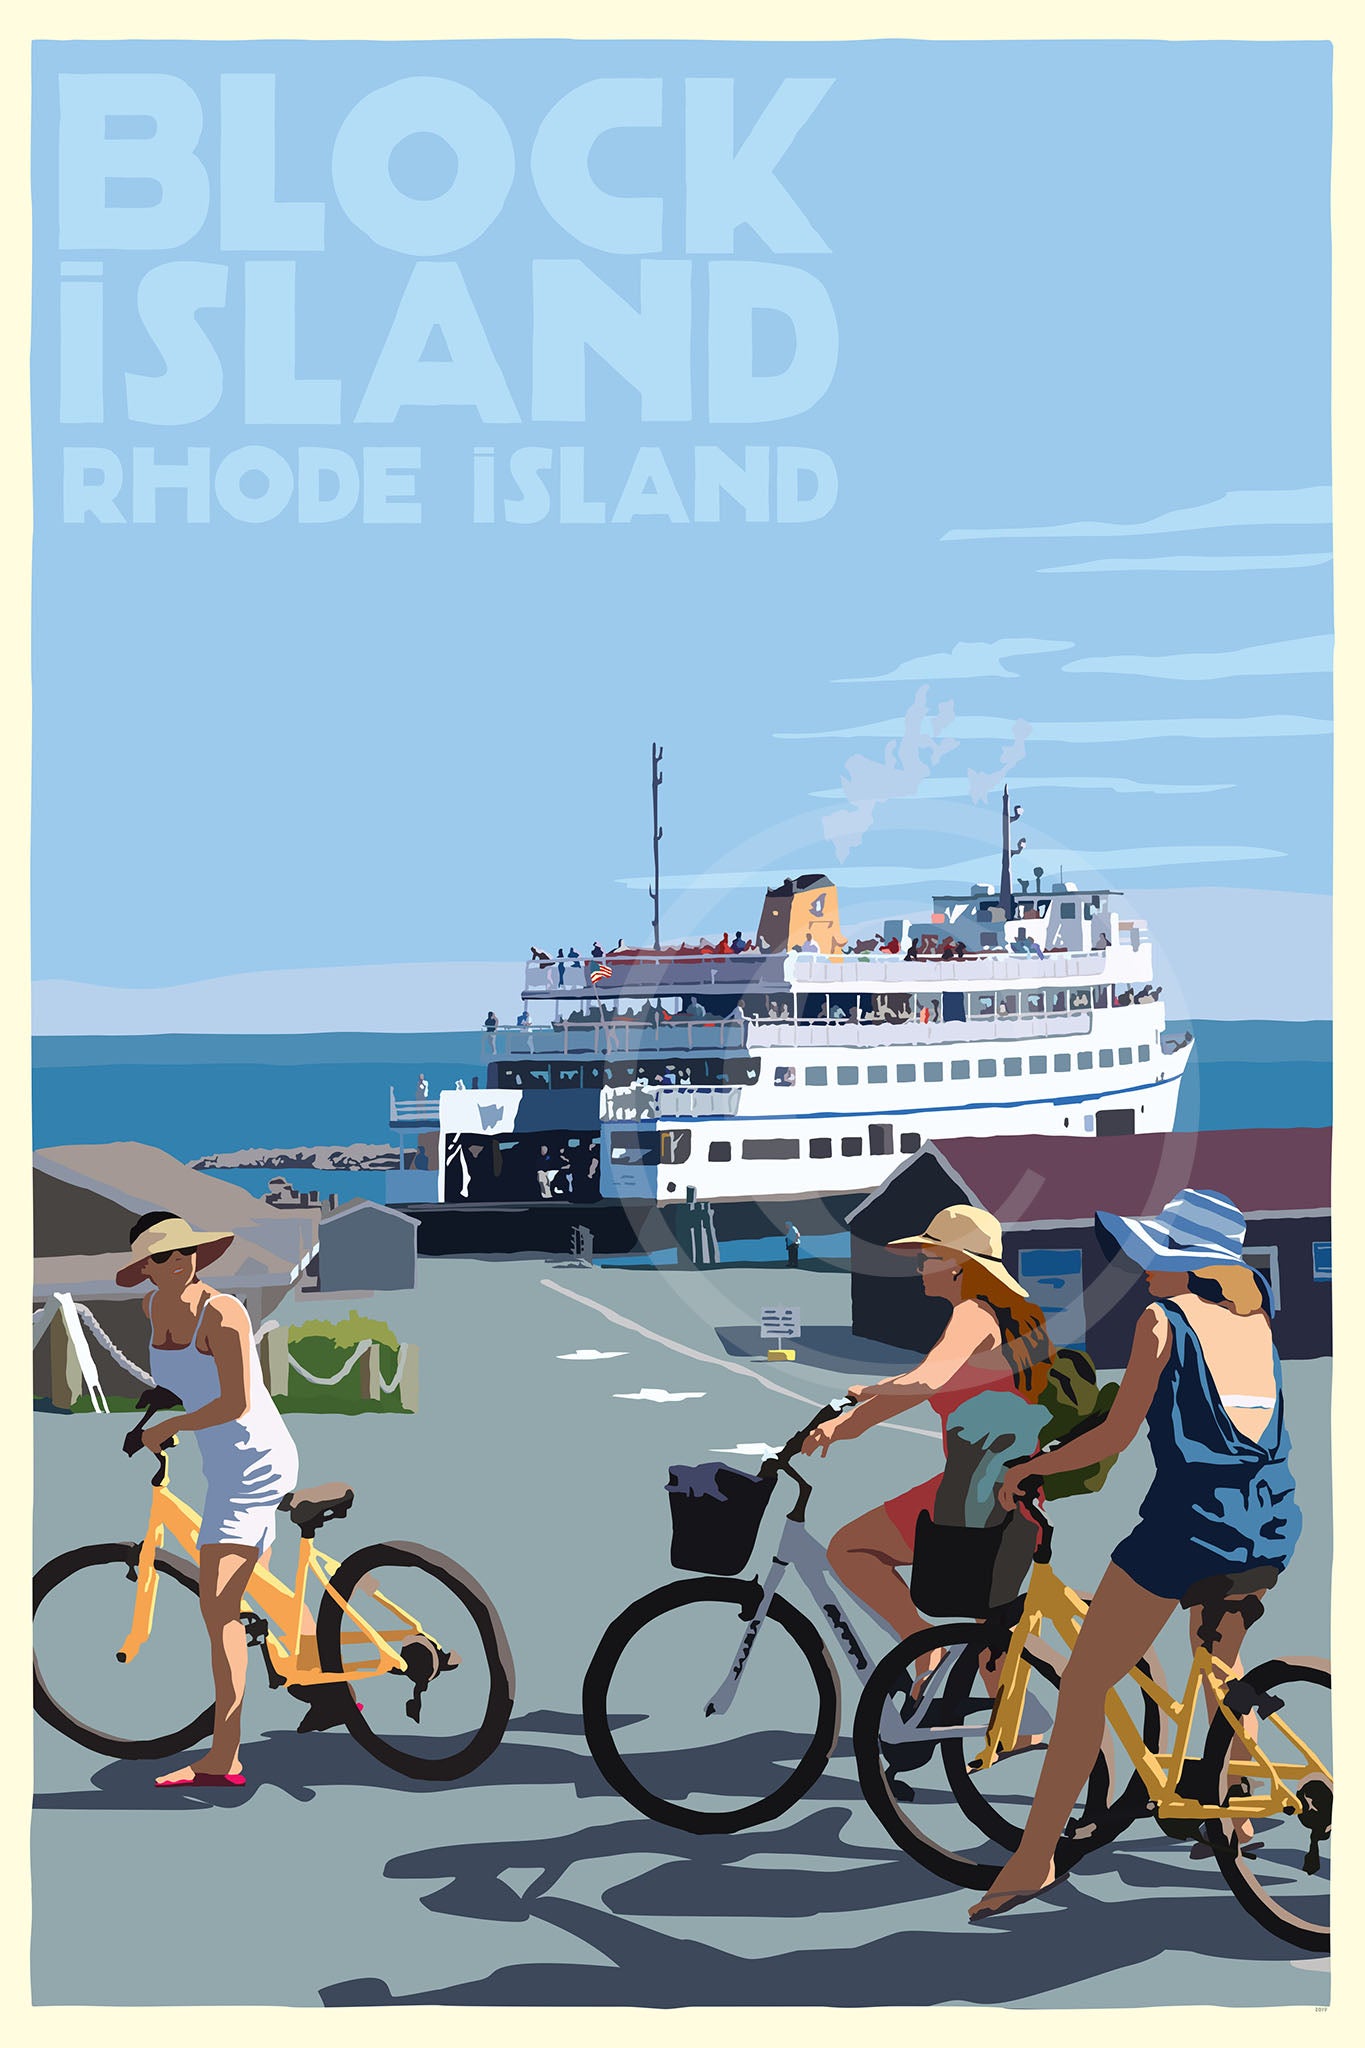 Block Island Bicycle Girls Art Print 24" x 36" Travel Poster By Alan Claude - Rhode Island